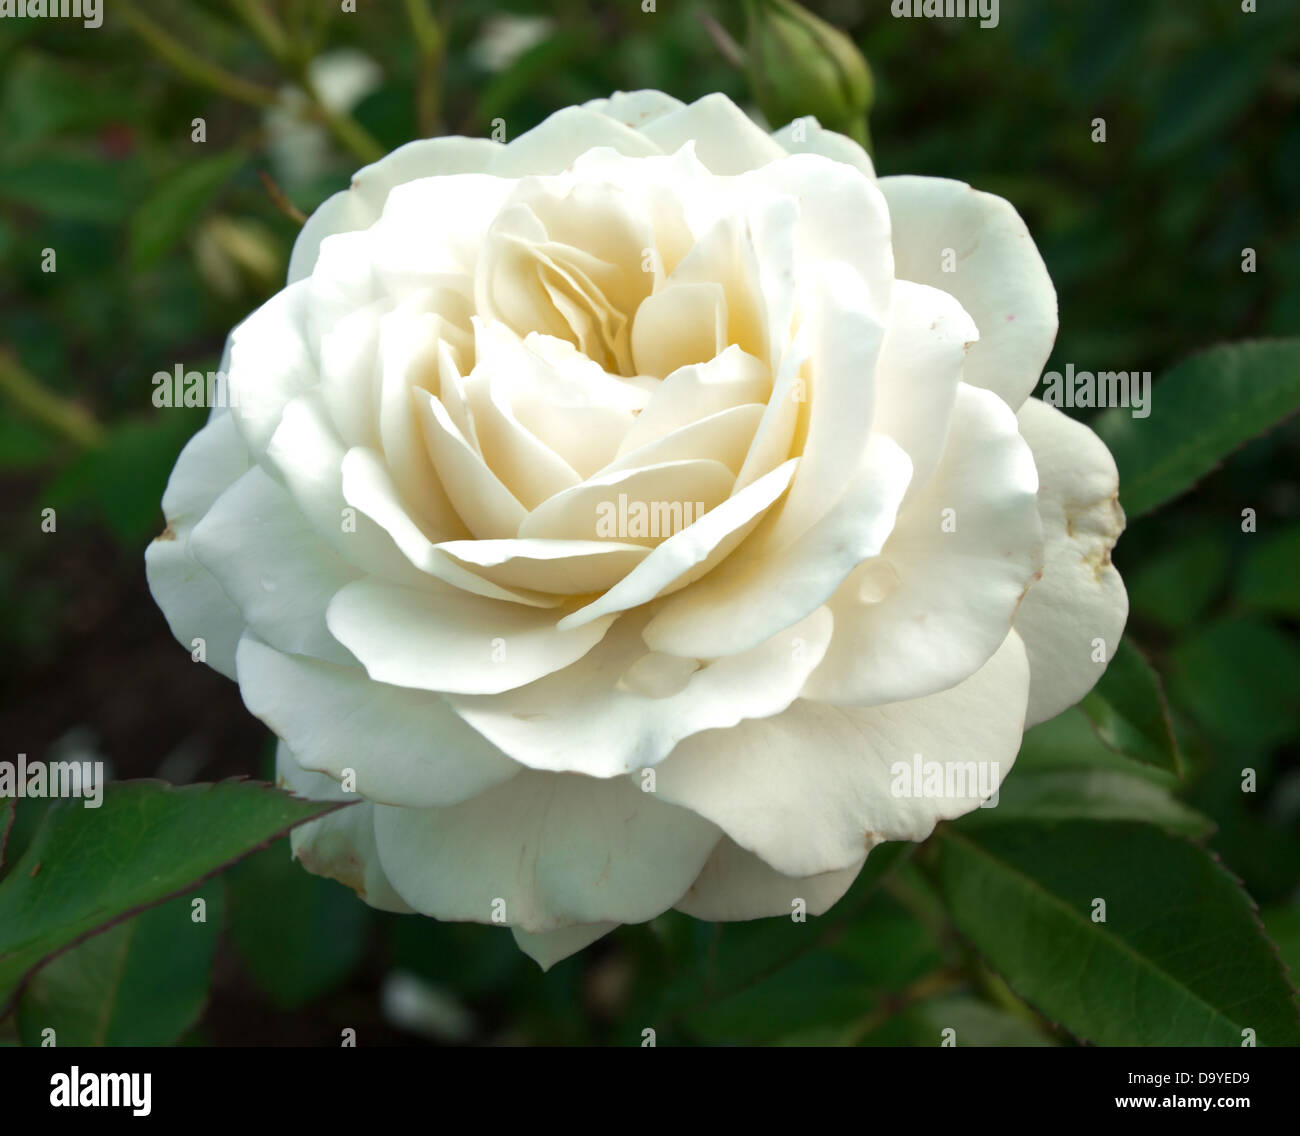 single white rose in garden Stock Photo - Alamy